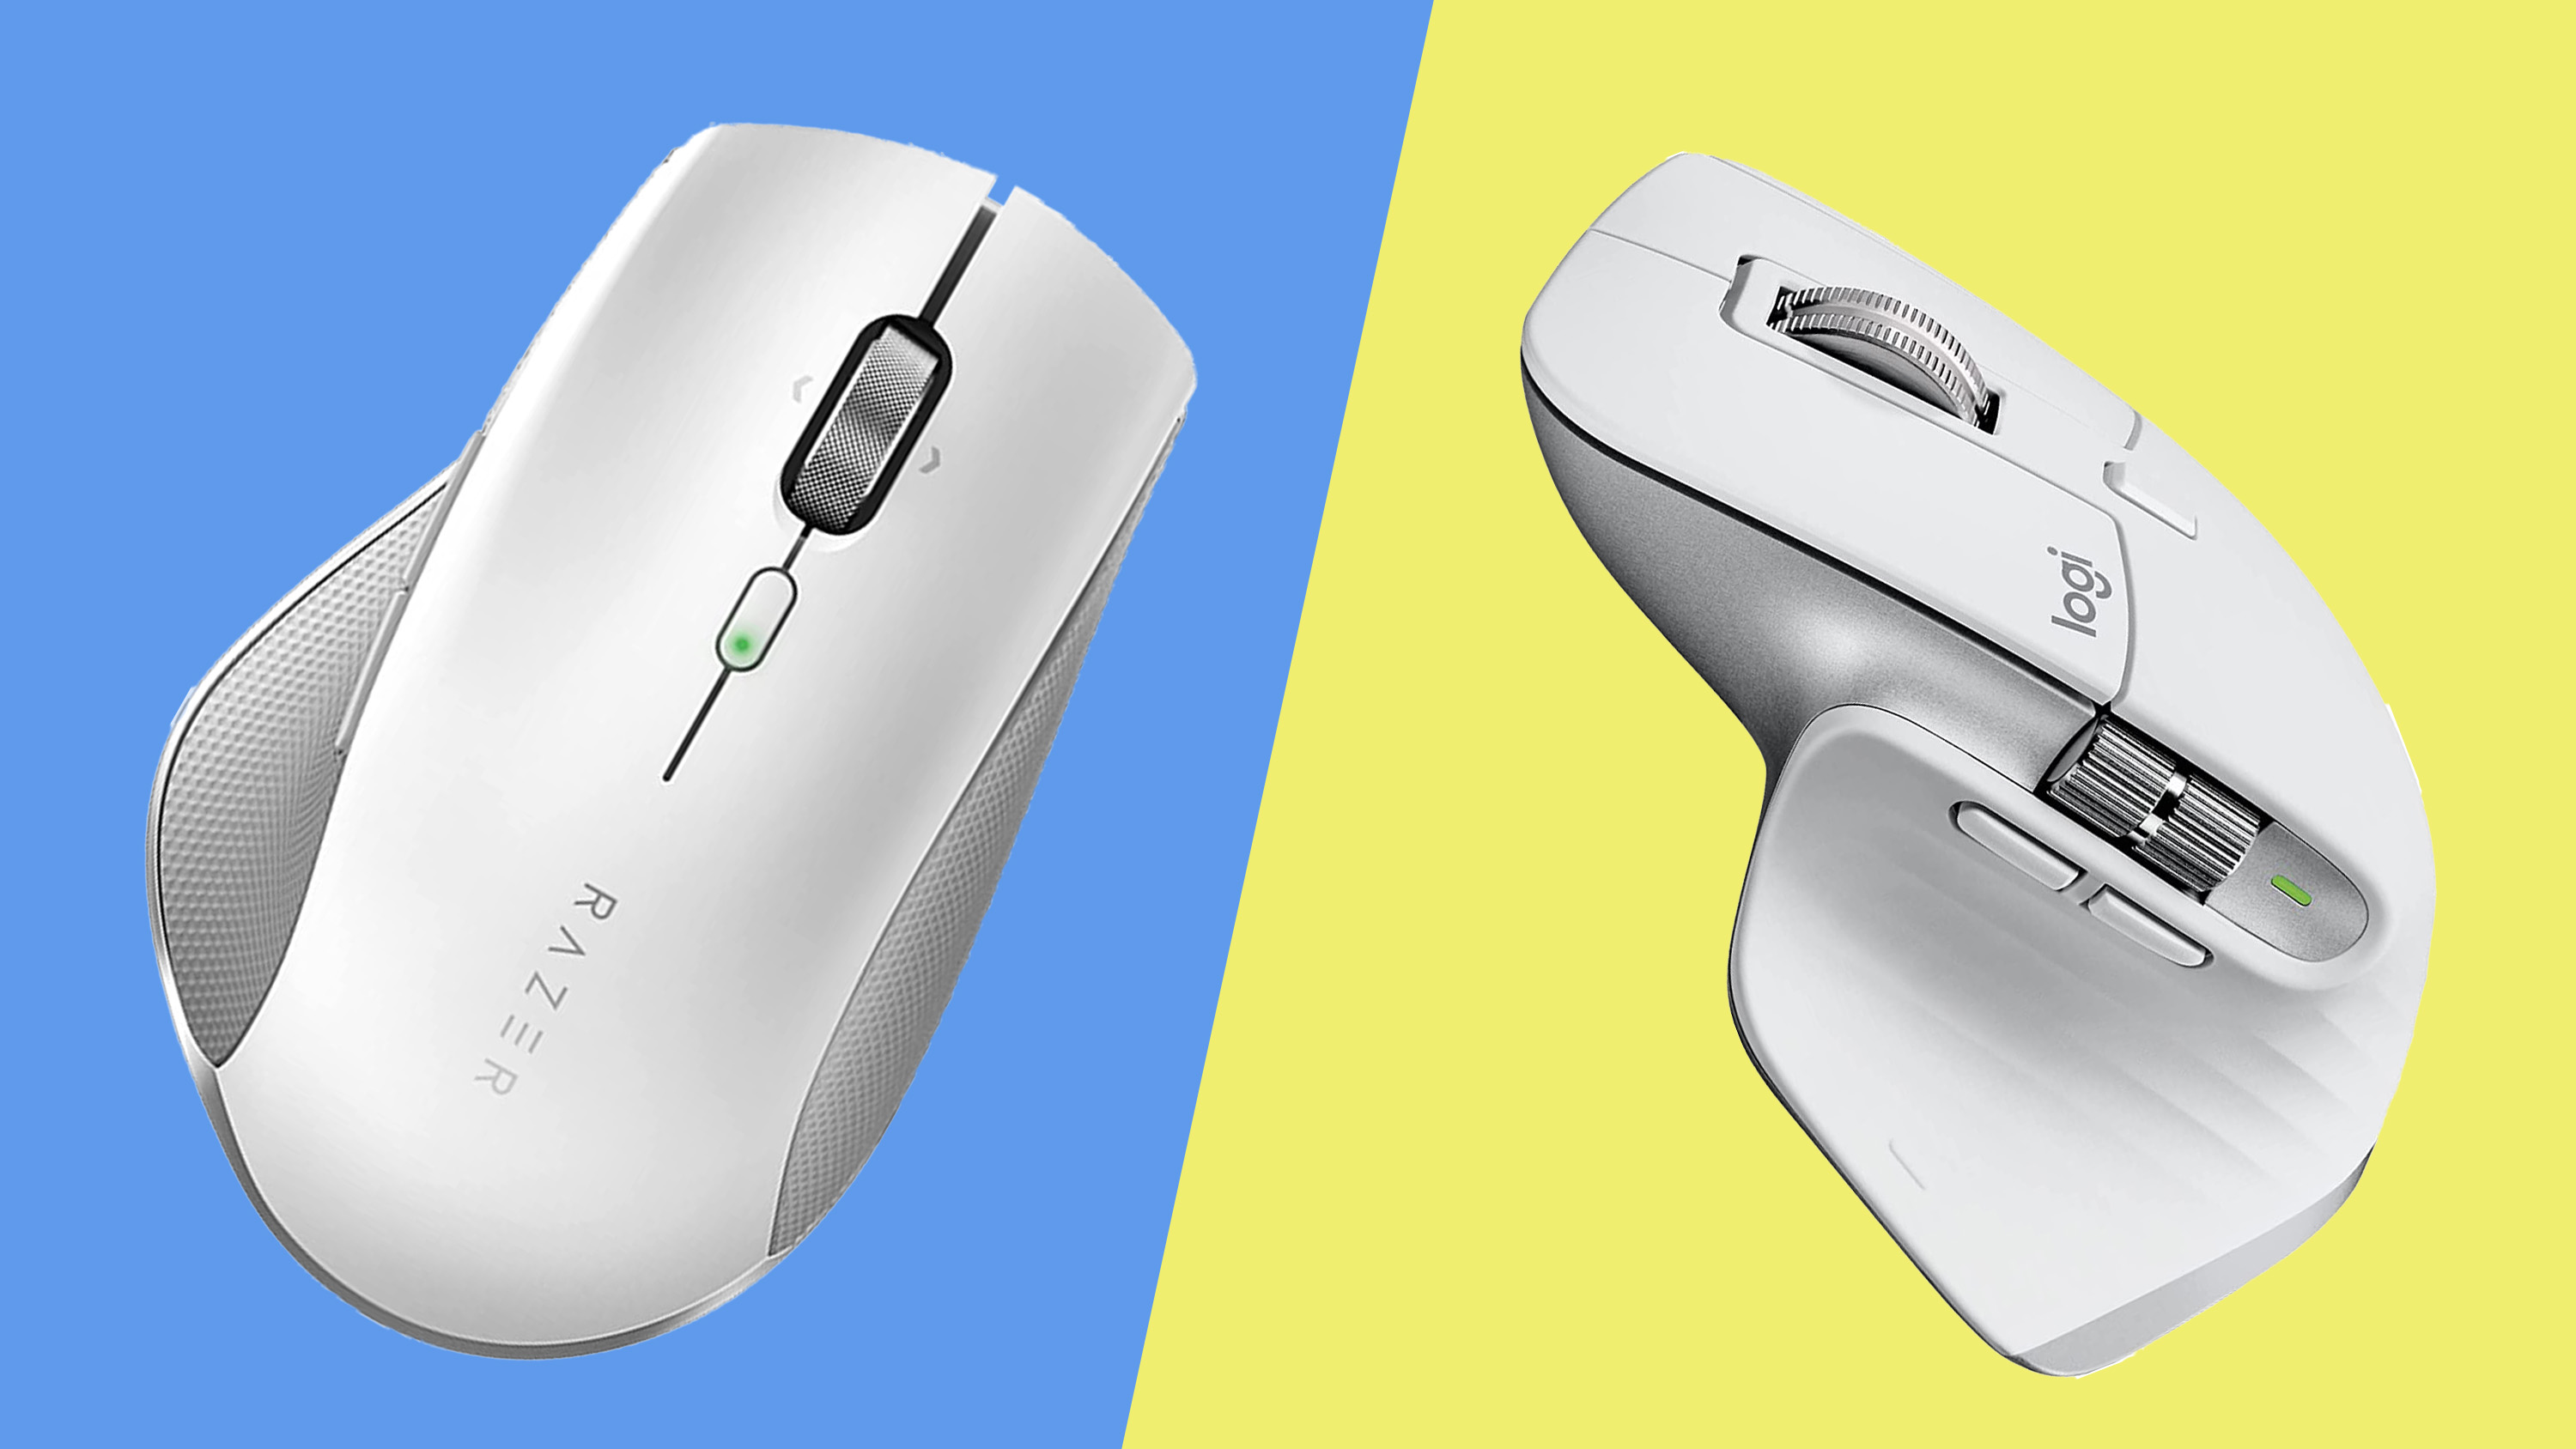 vs Click Master 3S: | best? TechRadar MX Razer is Pro Logitech which mouse